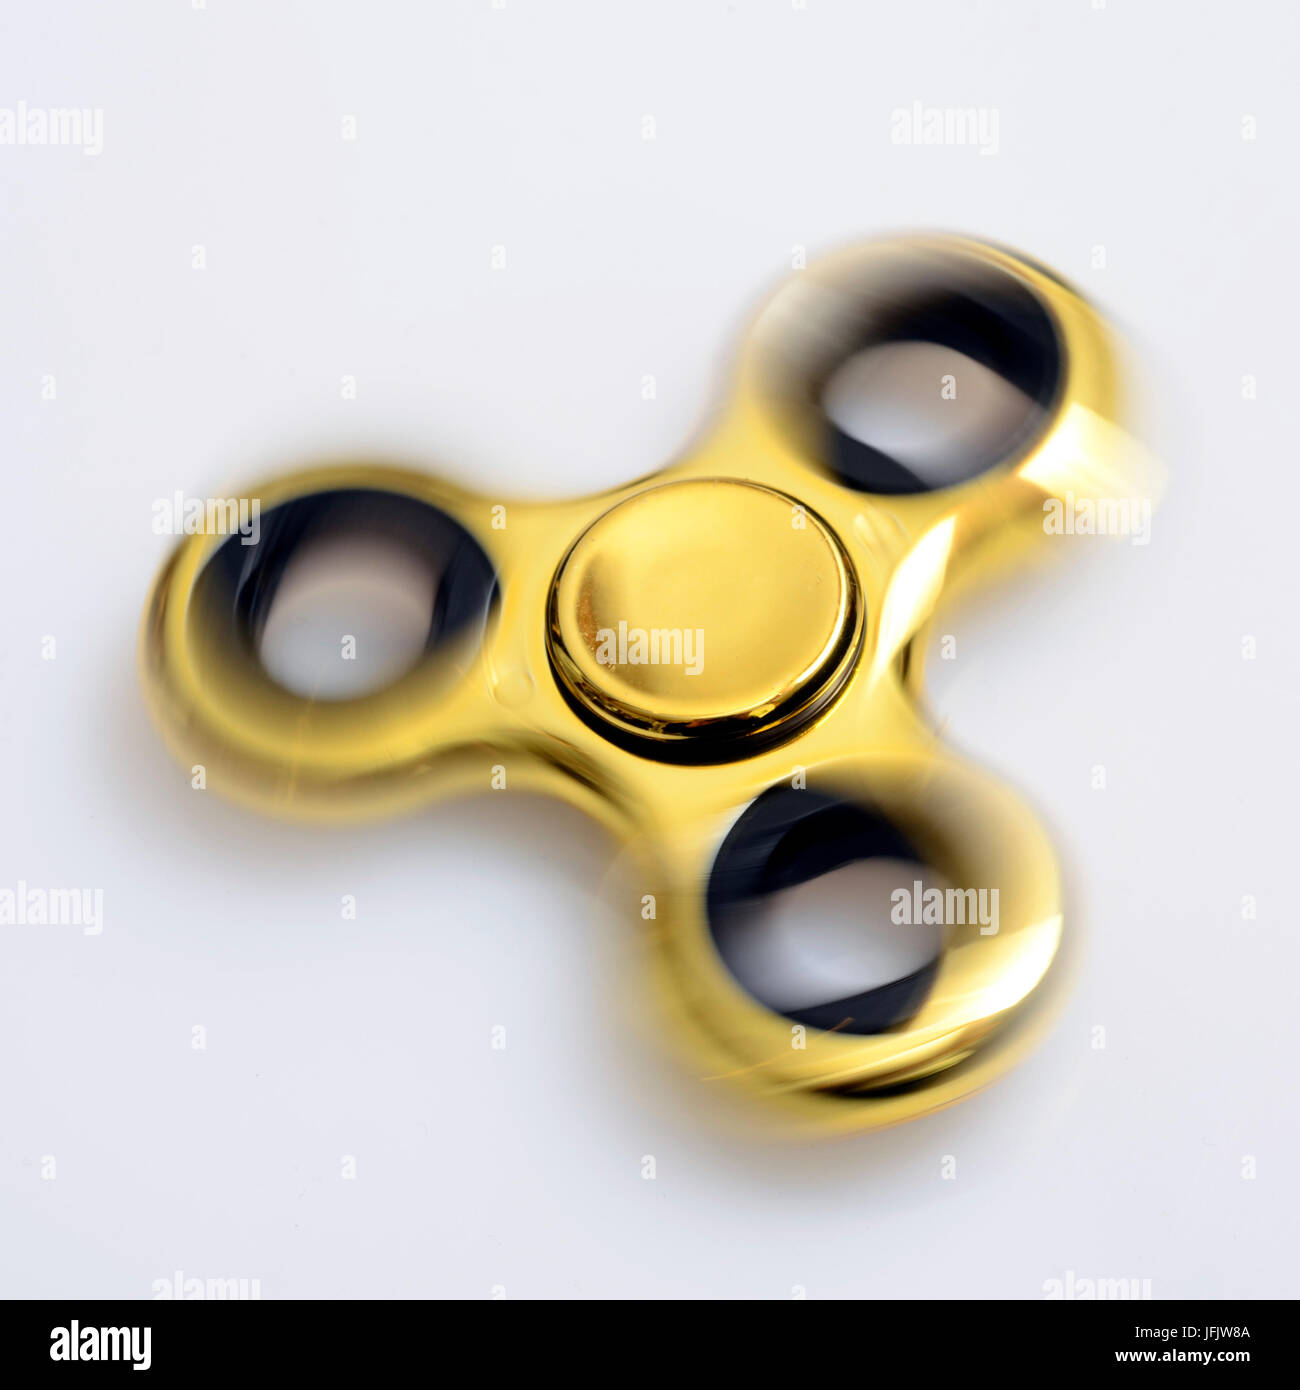 Hand holding fidget spinner golden toy Stock Photo by ©Premium_shots  152129290